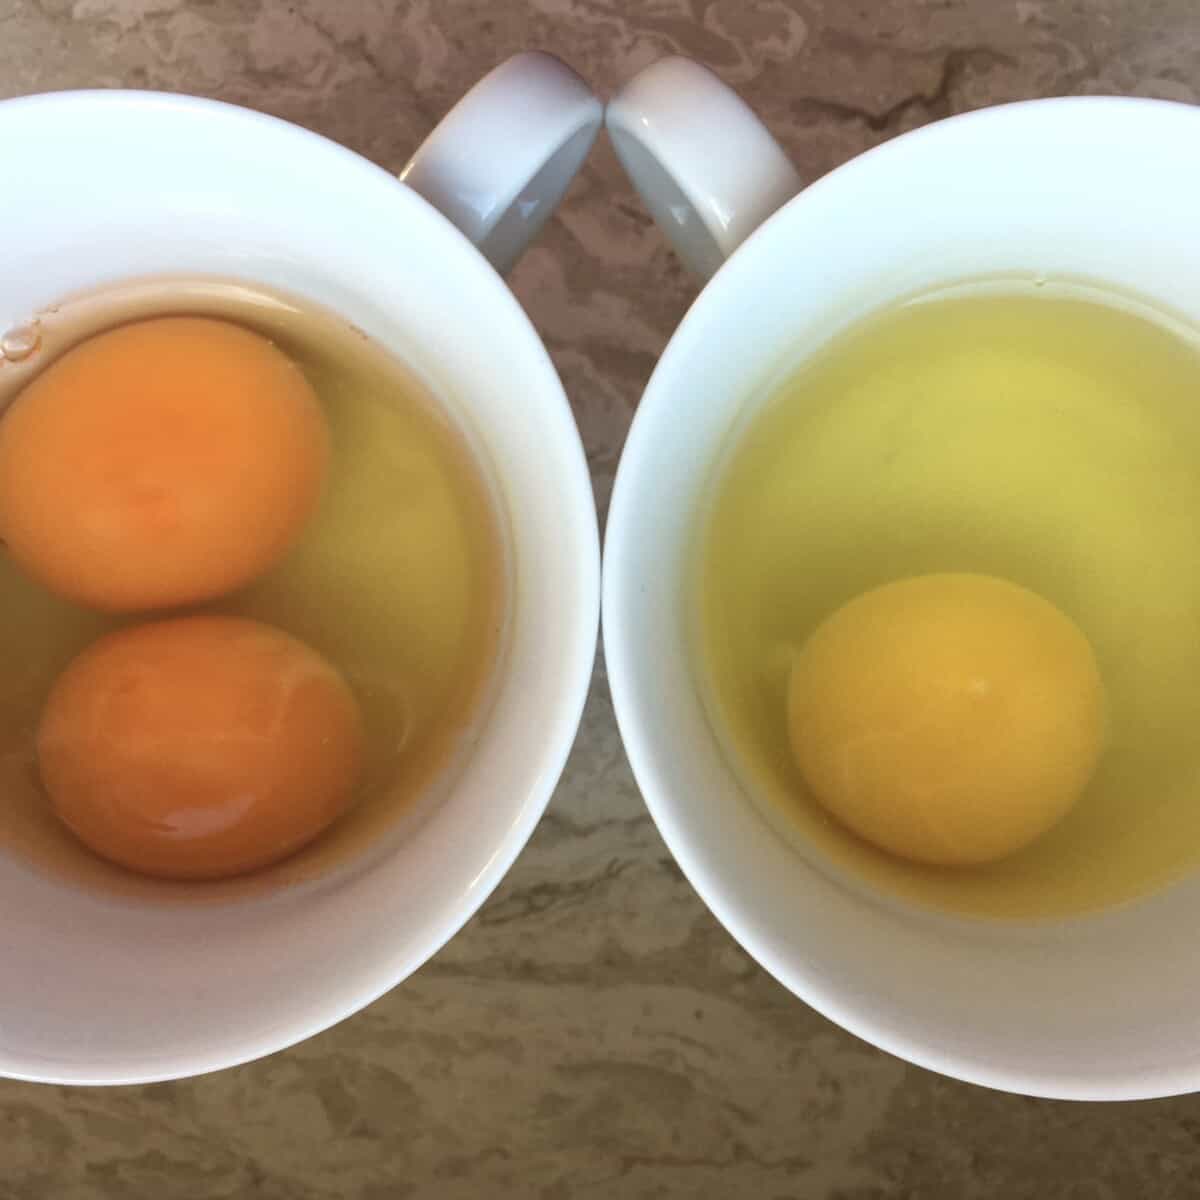 dark orange Italian pasta gialla eggs on the left and regular yellow eggs on the right